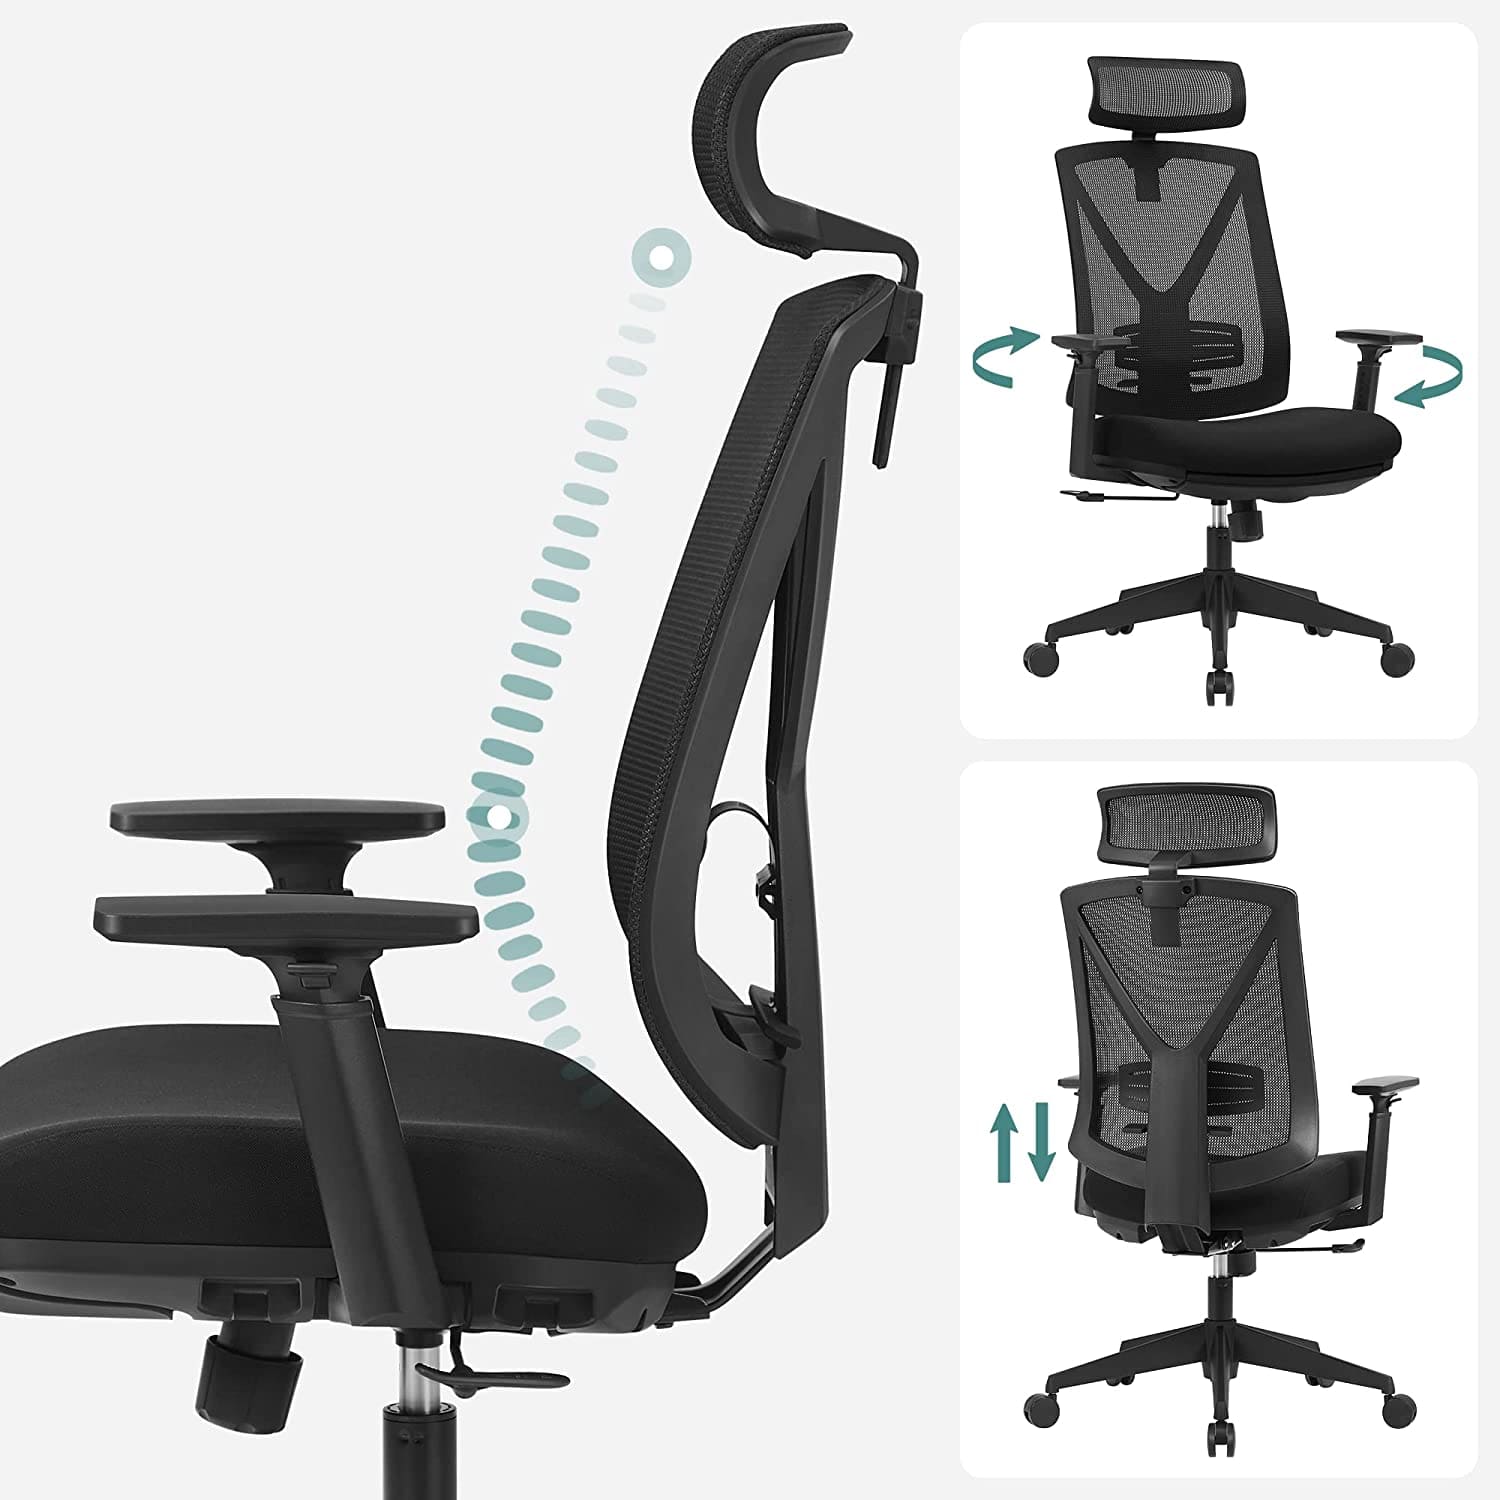 SONGMICS - Silla de oficina, silla de oficina ergonómica, respaldo con curva para la columna